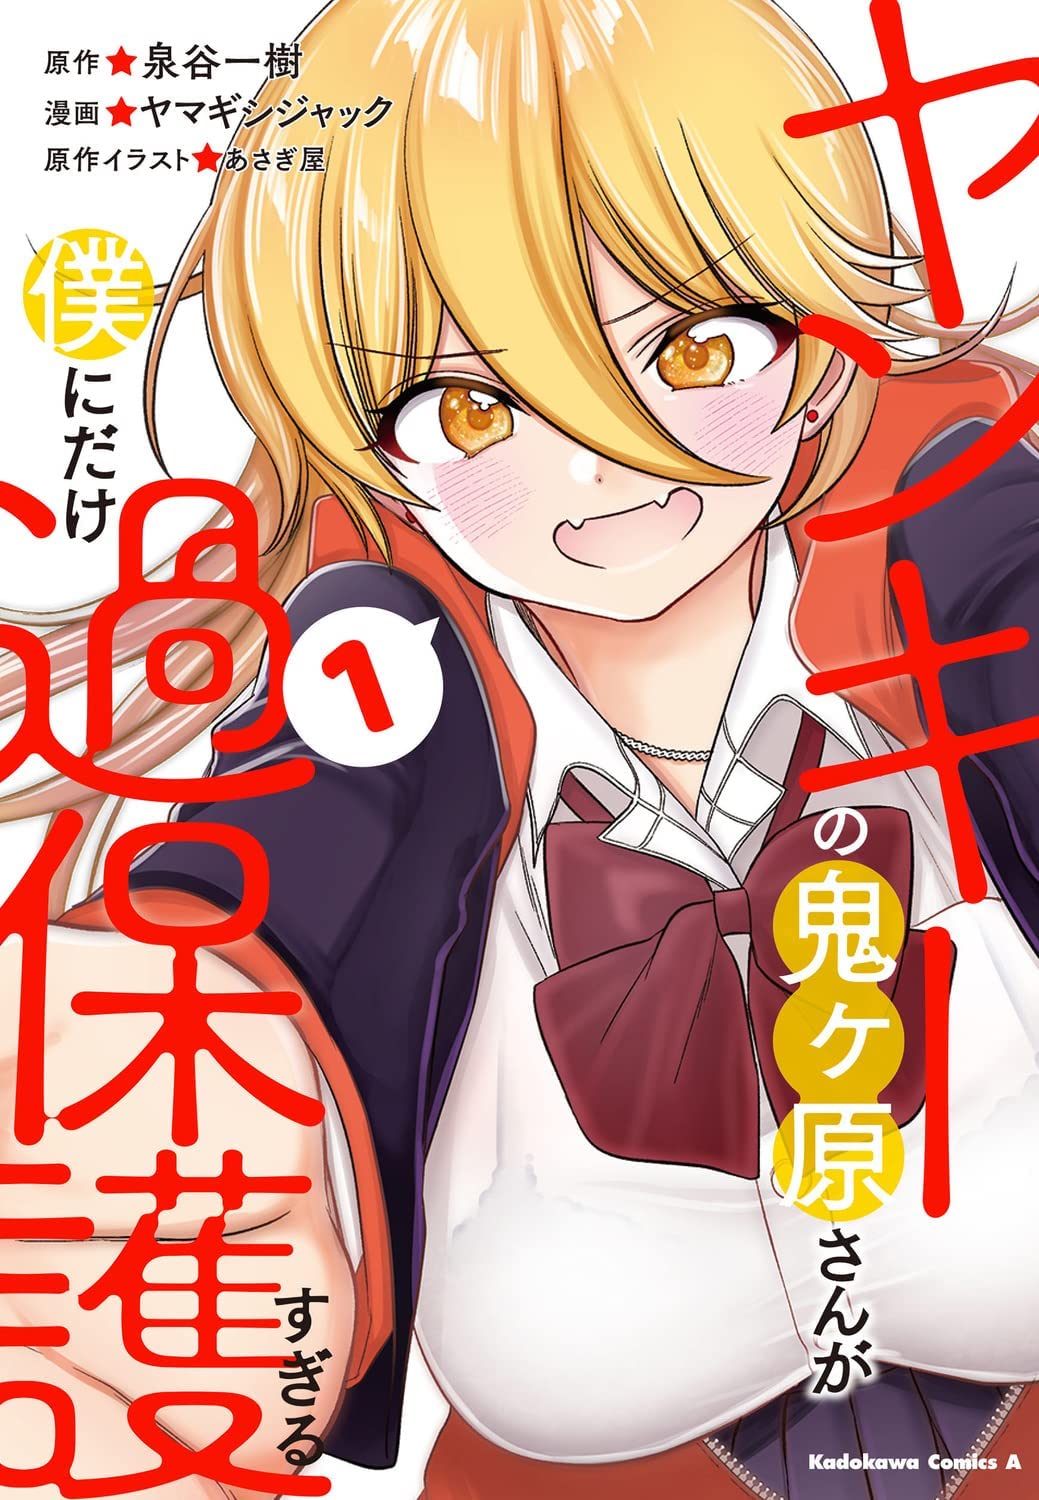 Manga Mogura RE on X: Romcom LN Menhera ga Aisai Apron ni